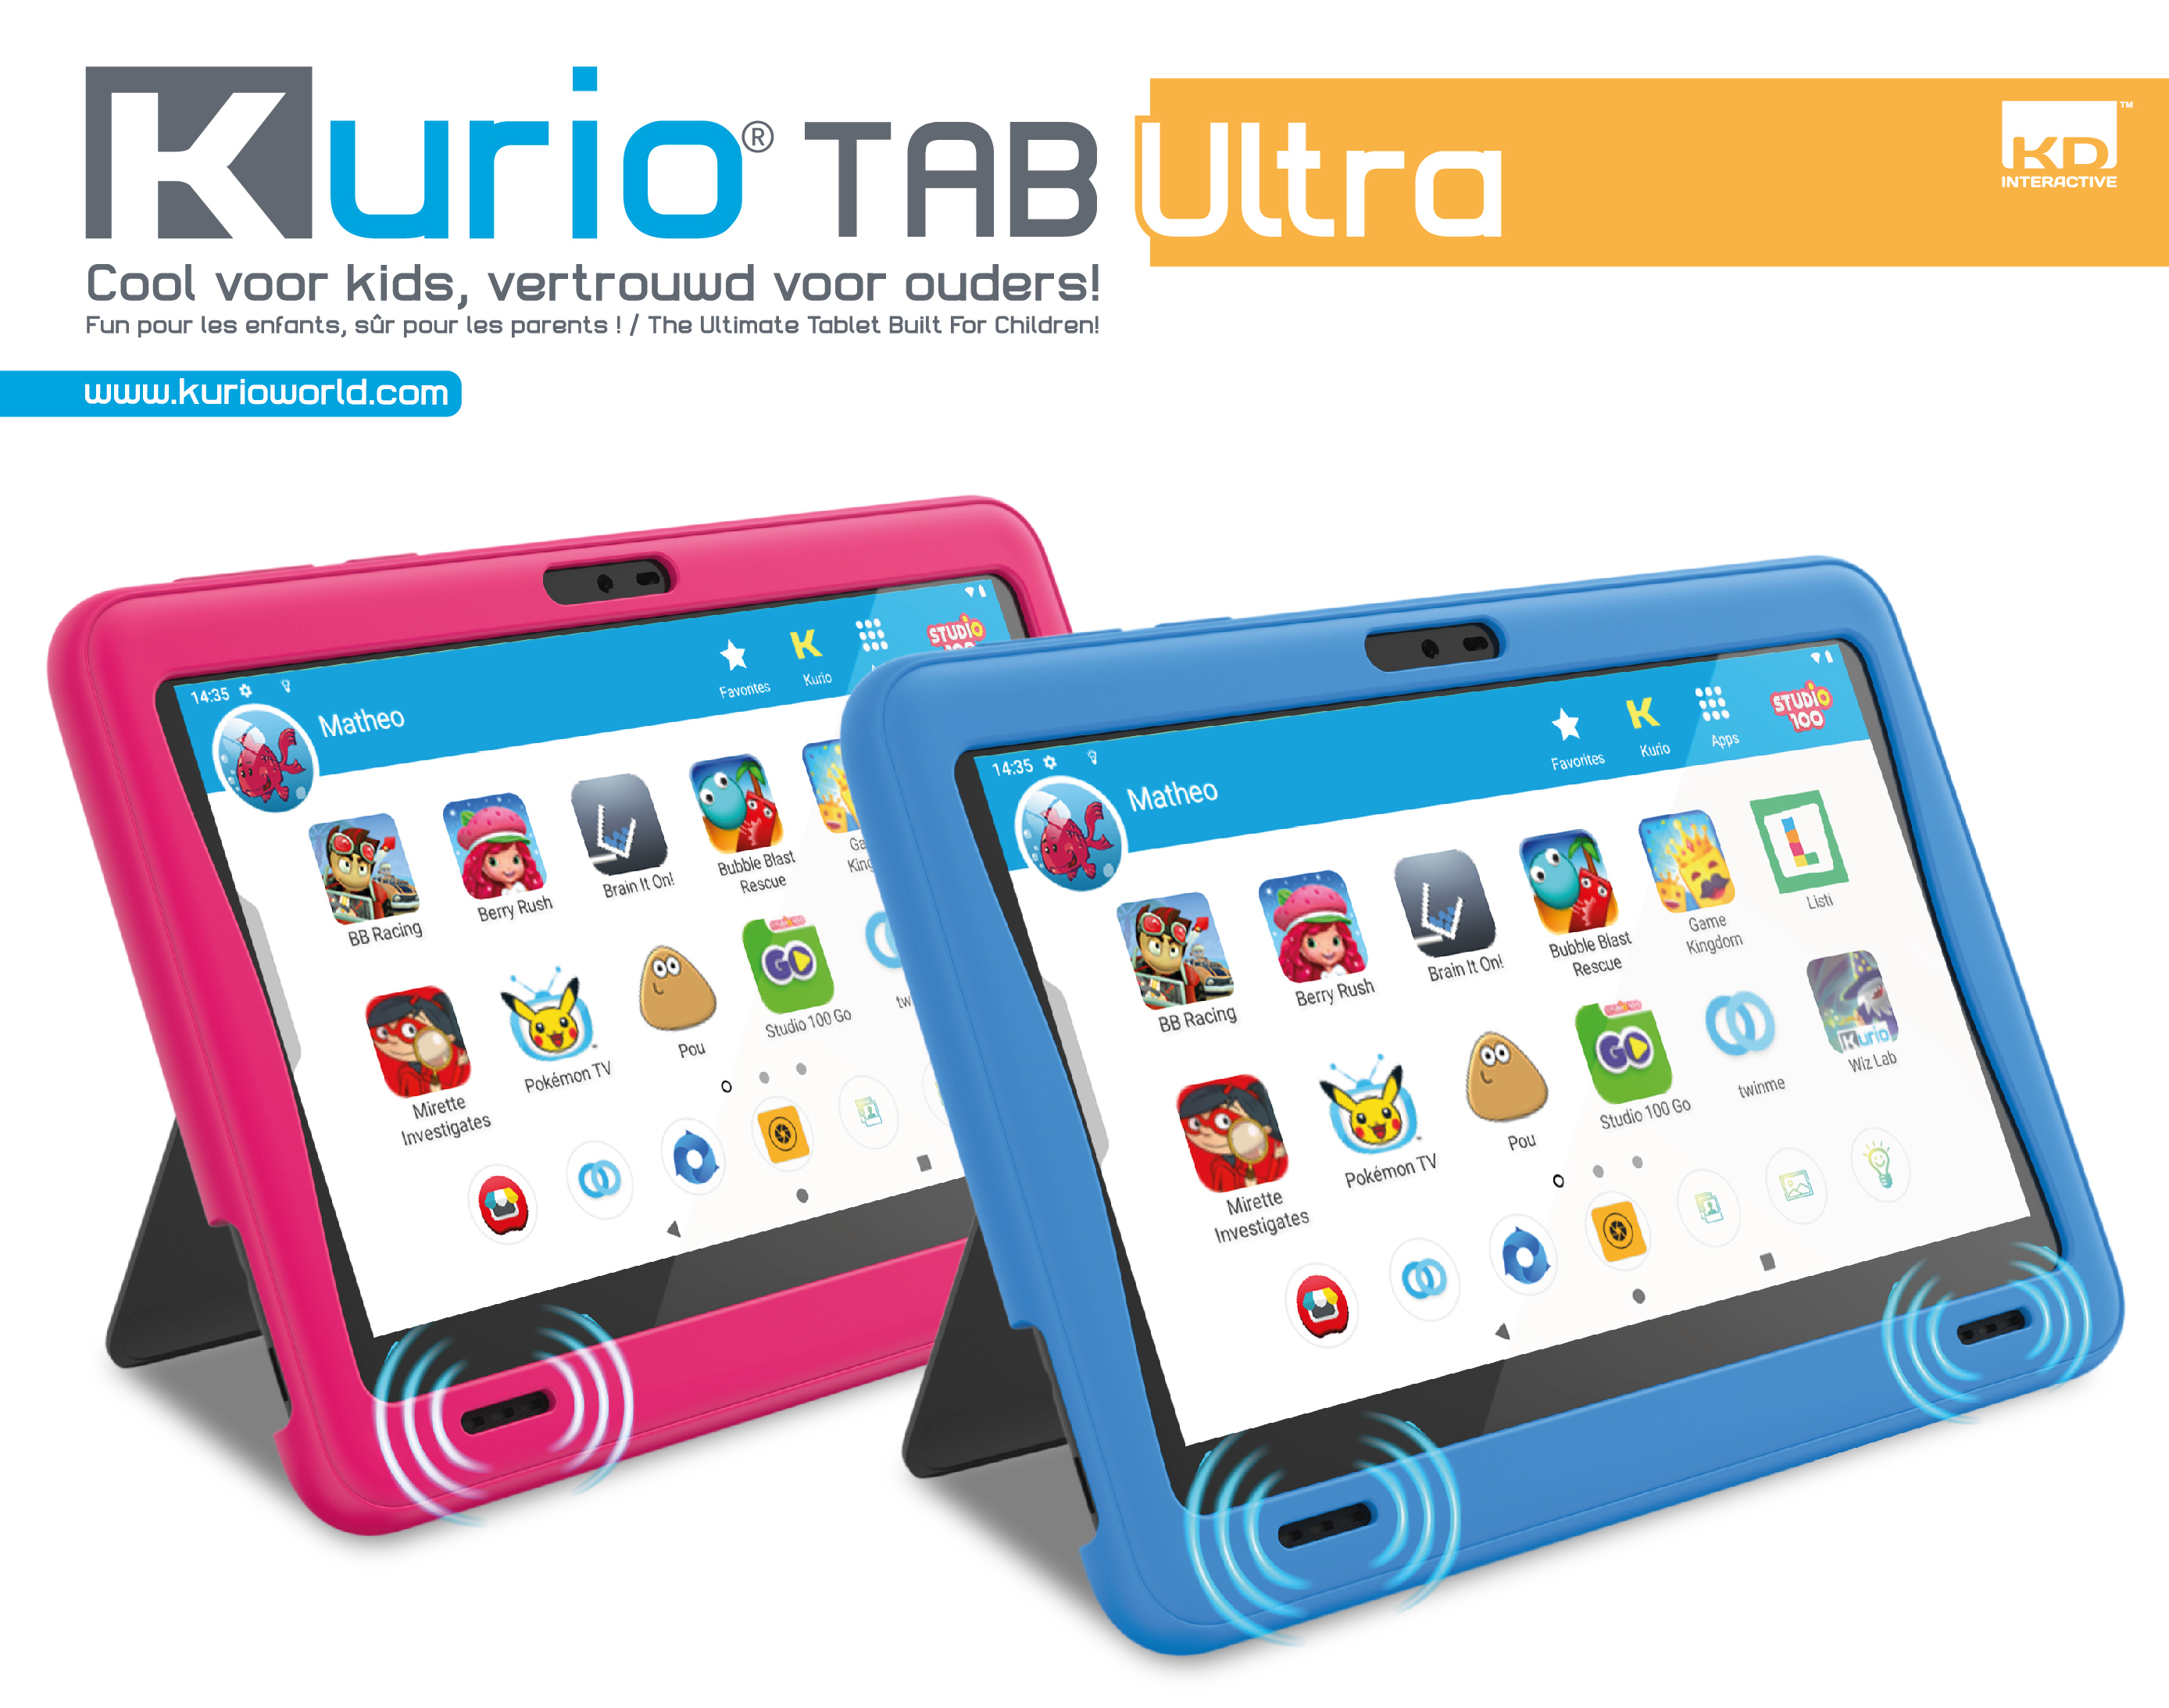 TAB ULTRA STUDIO 100 KINDERTABLET 16 GB Wifi Roze